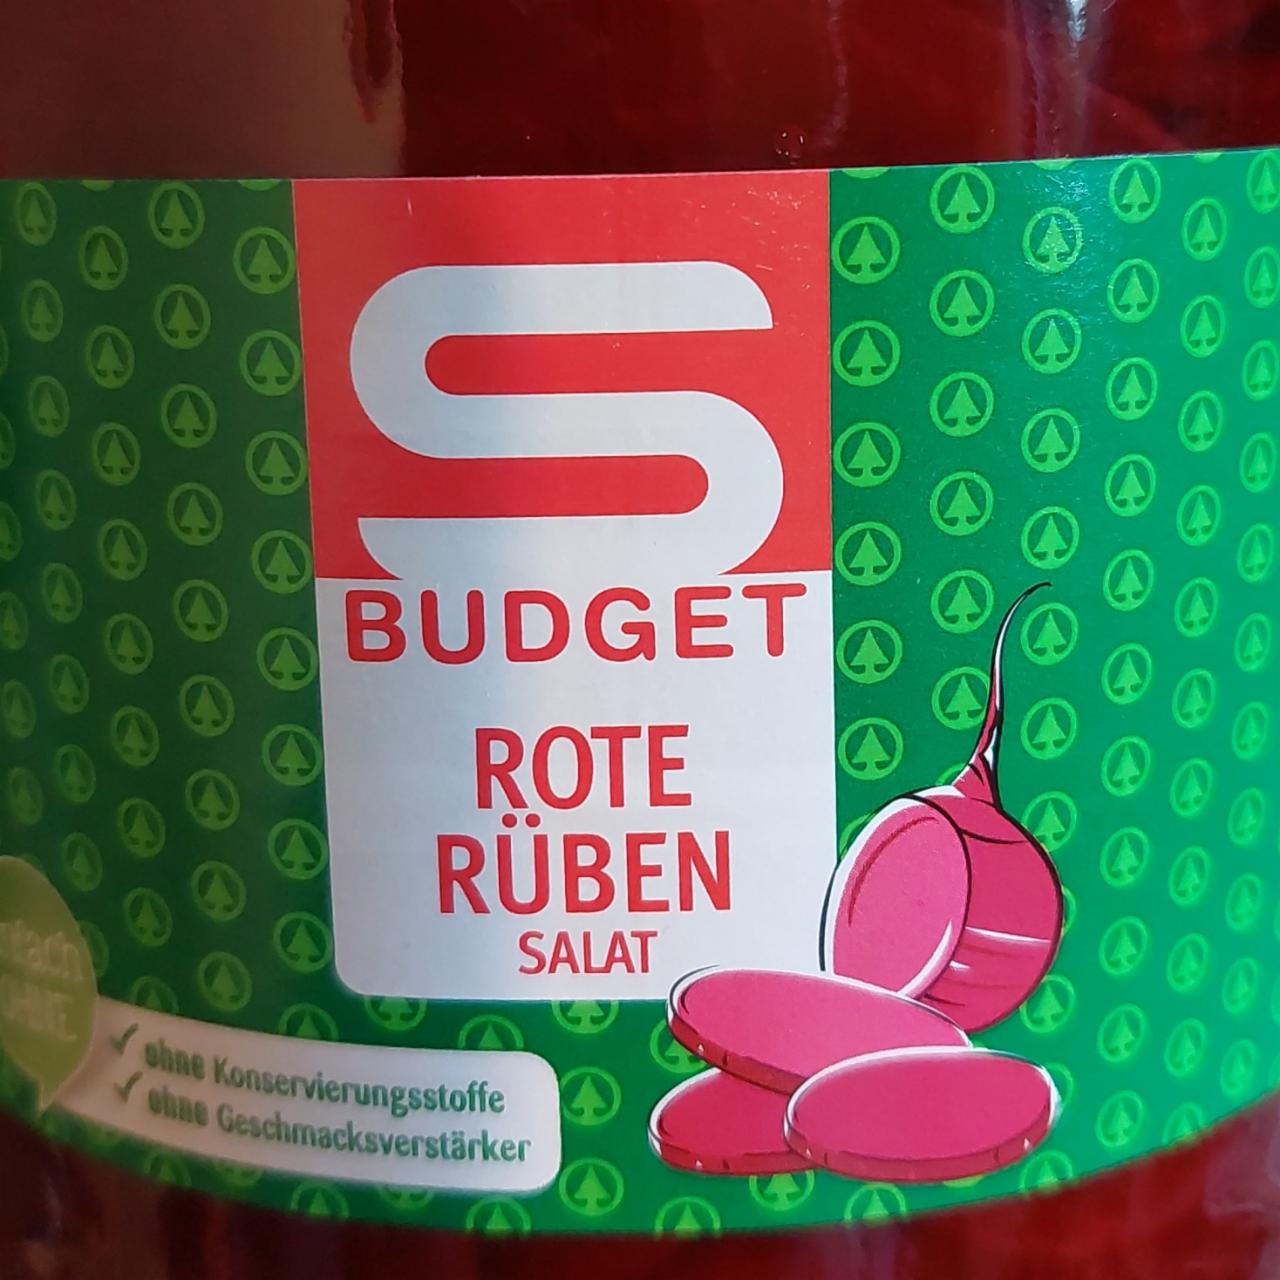 Fotografie - Rote rüben salat S Budget